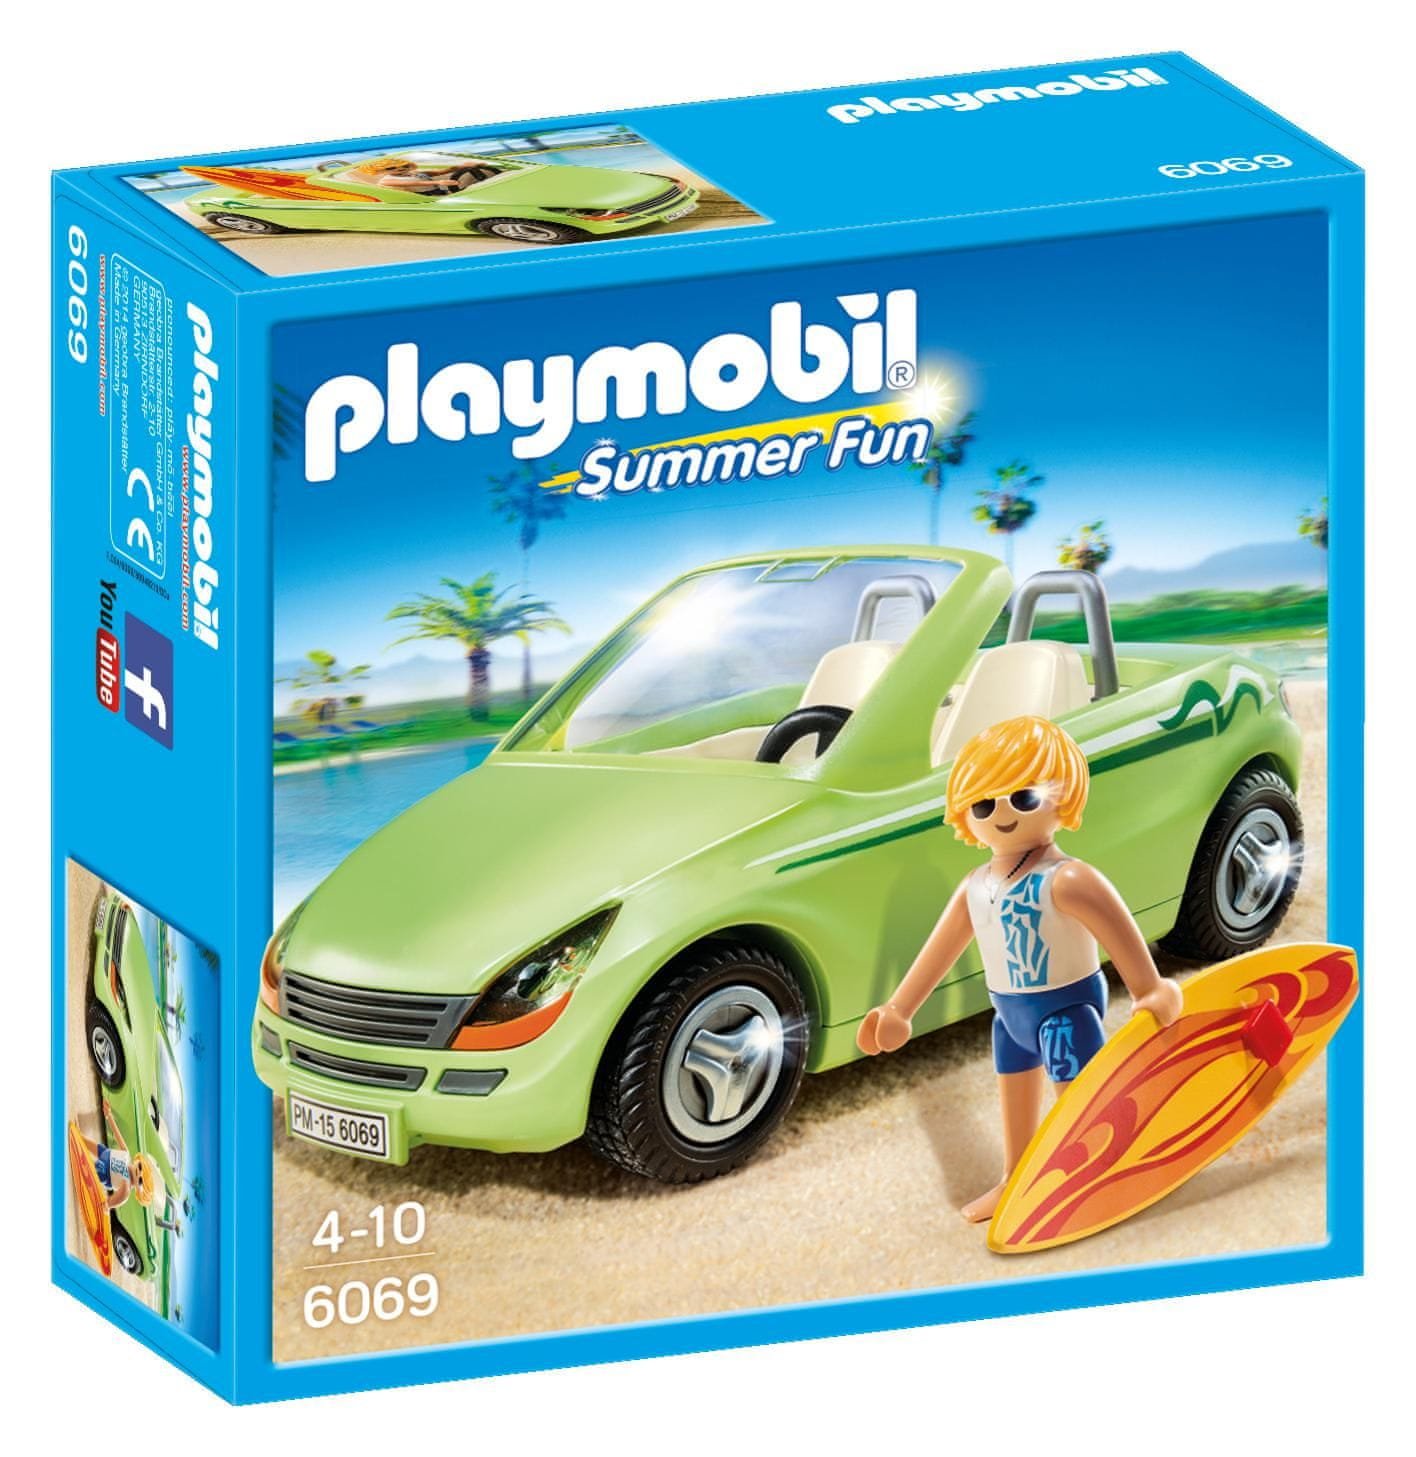 Playmobil 6069 Roadster und Surfbrett